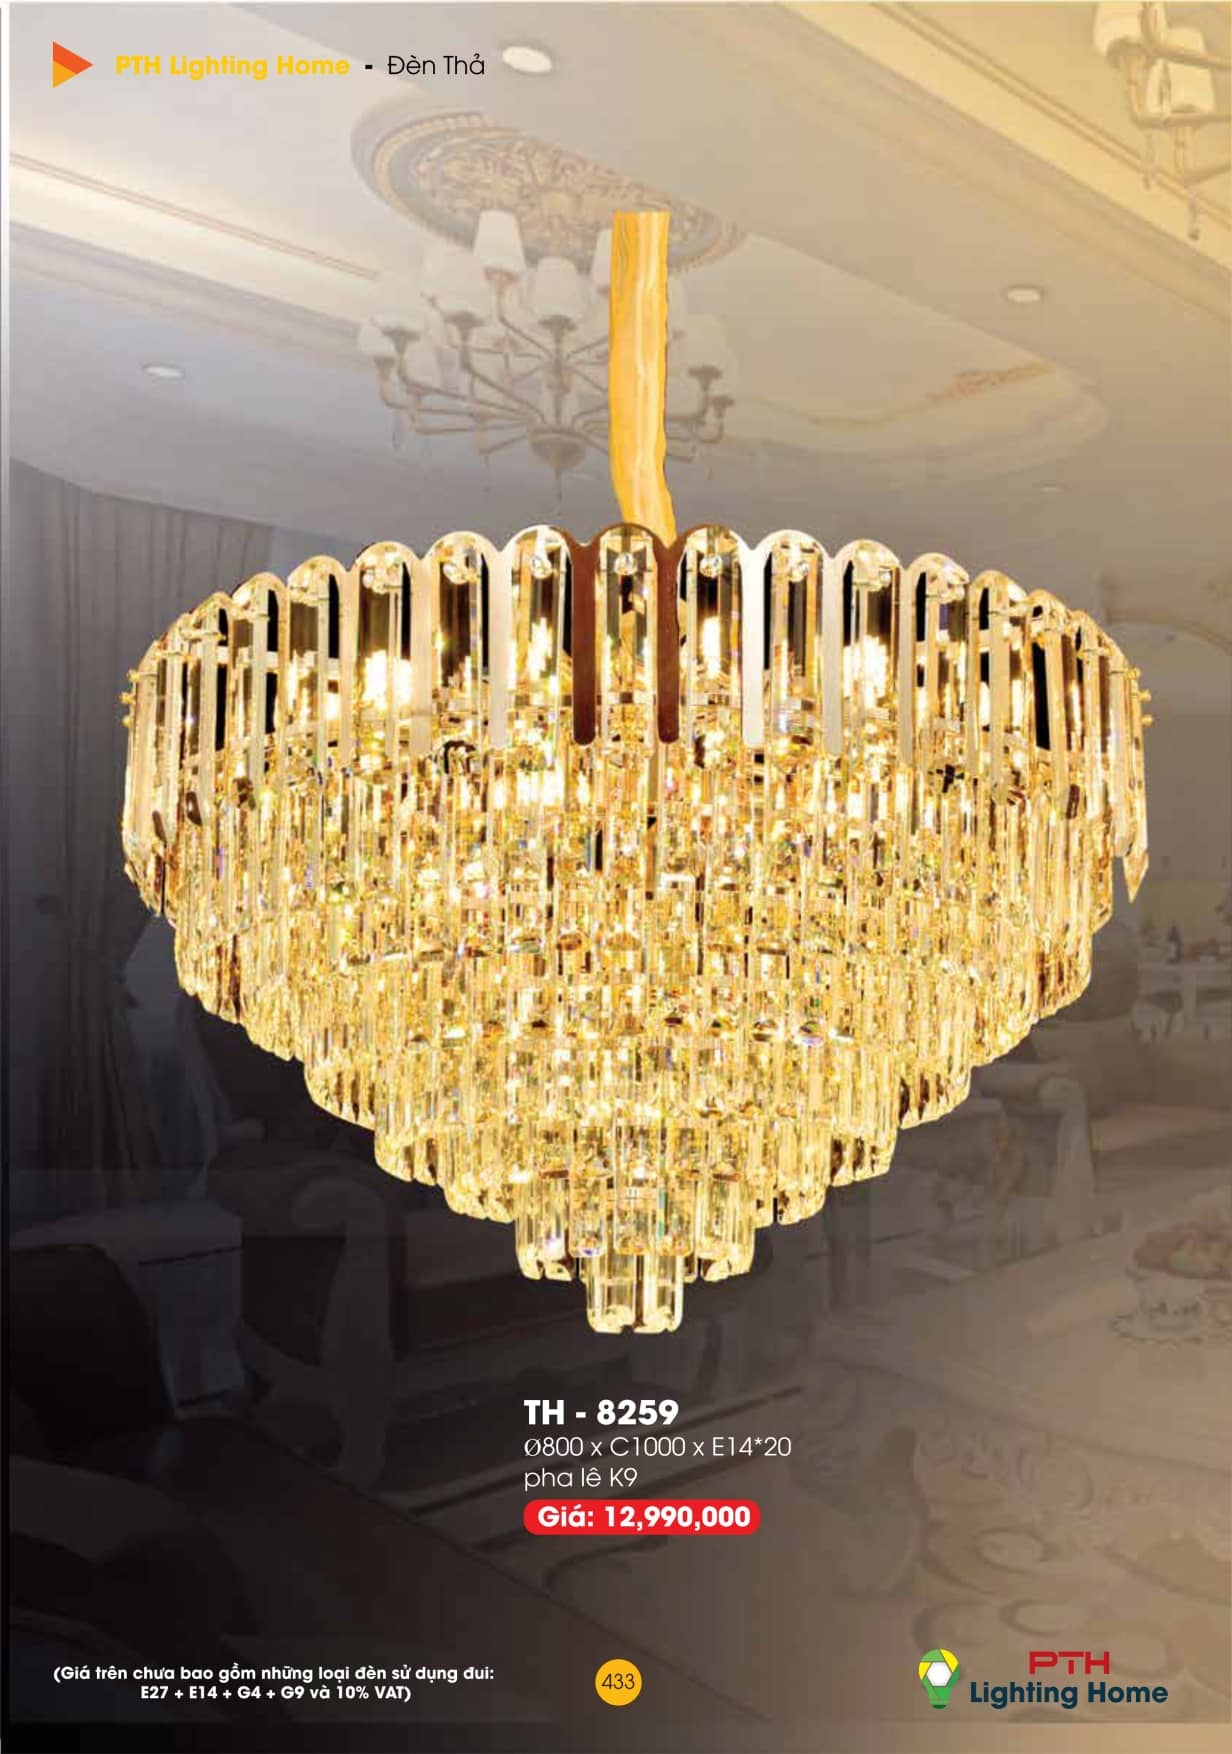 catalogue-bang-gia-den-led-trang-tri-pth-lighting-home-435